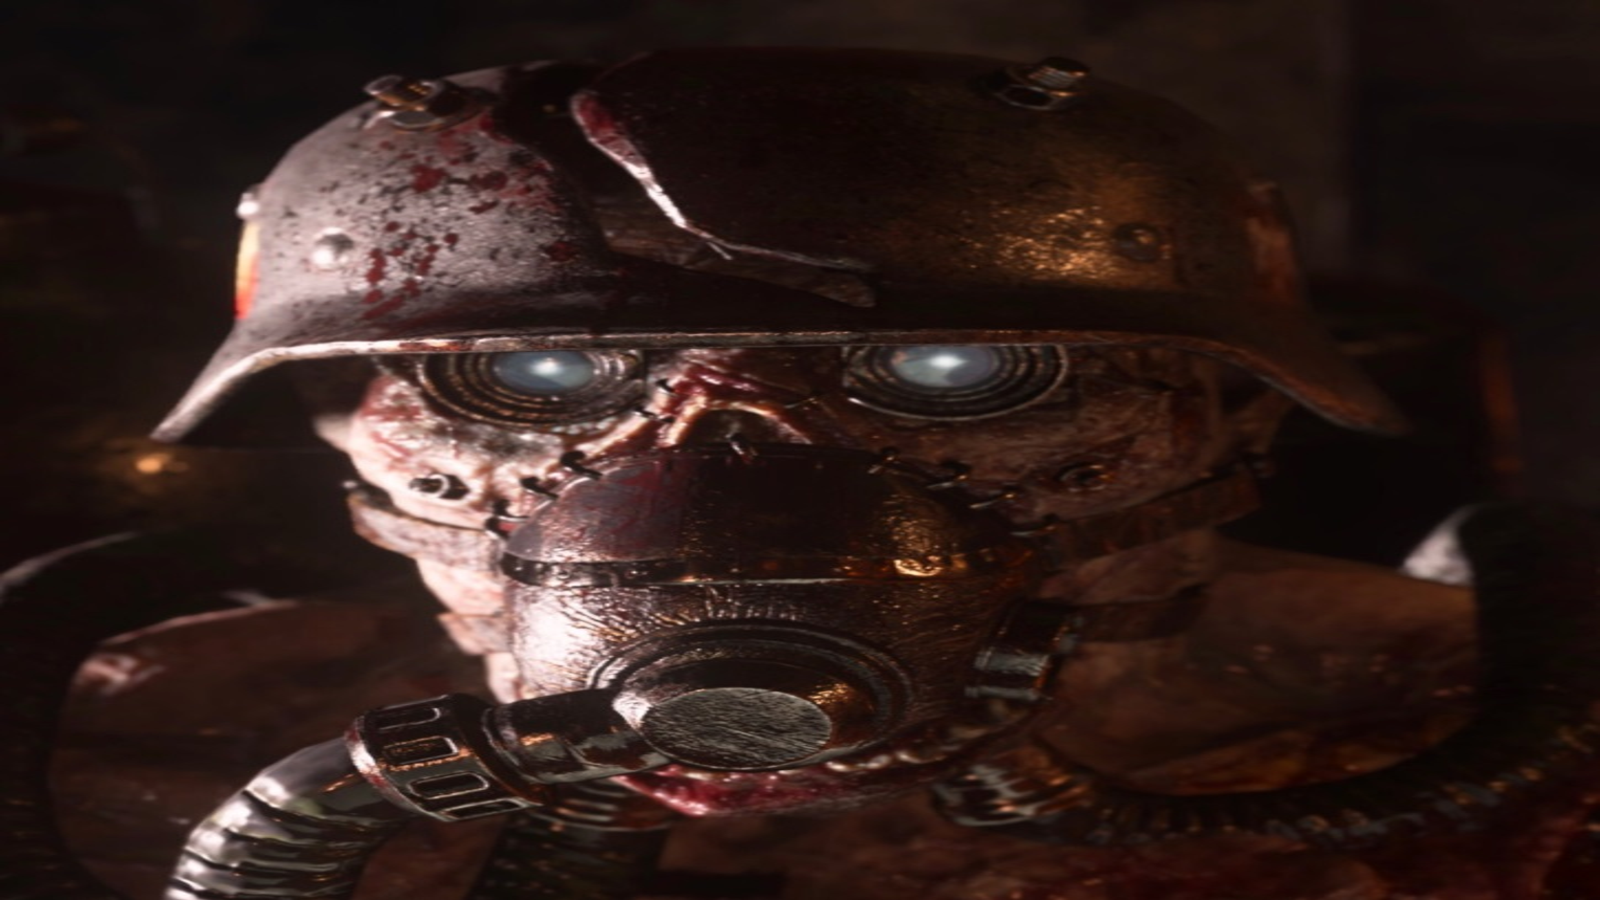 Qoo News] Call of Duty:WWII Nazi Zombie Mode Revealed!